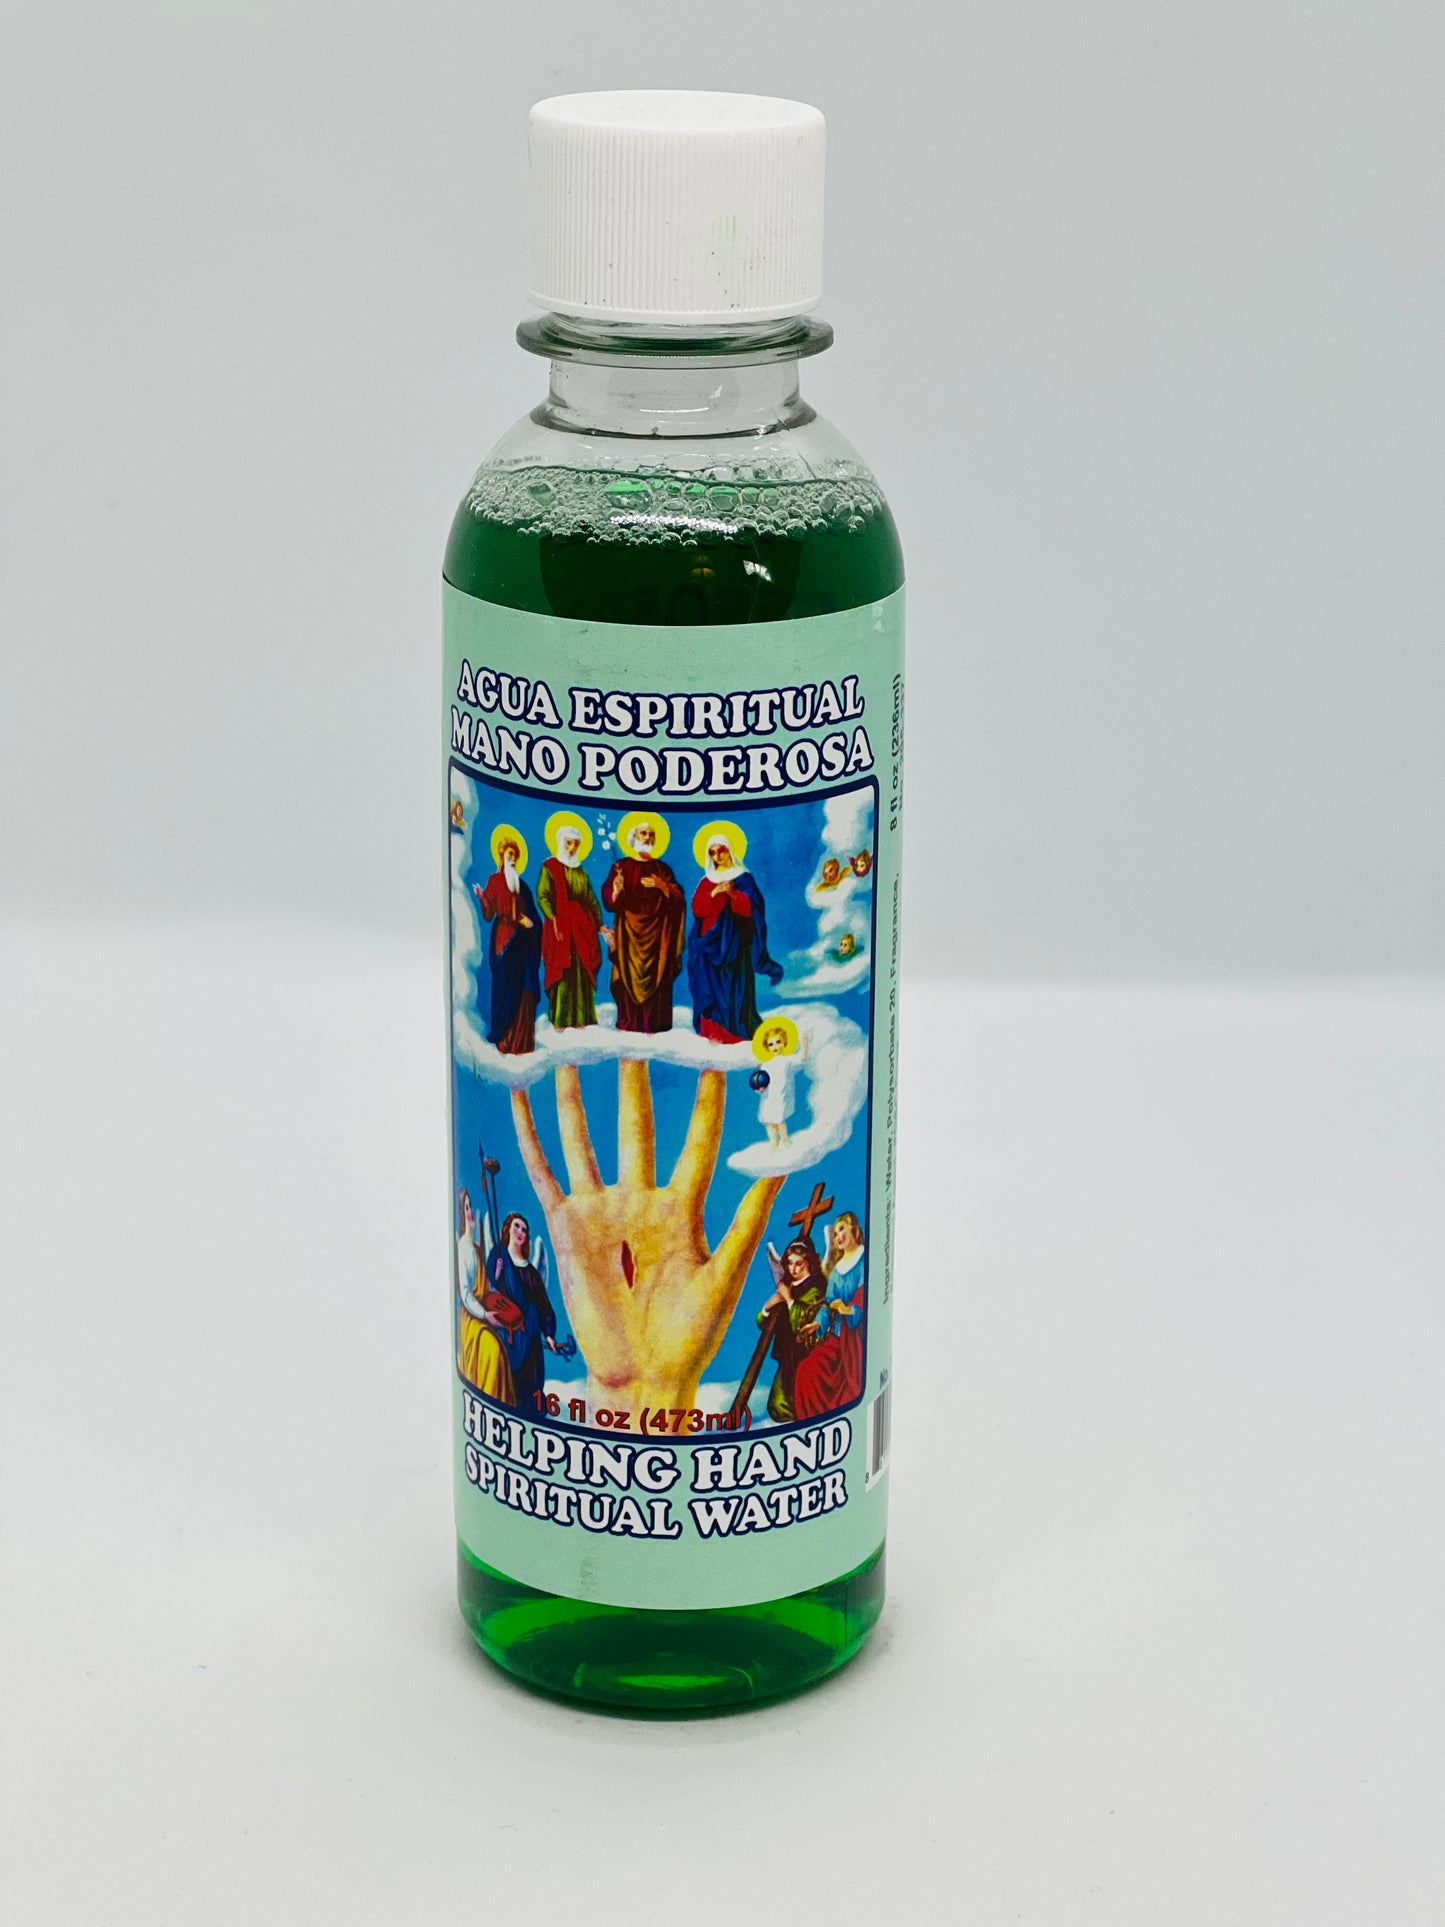 Helping Hand Spiritual Water/Mano Poderosa Agua Espiritual